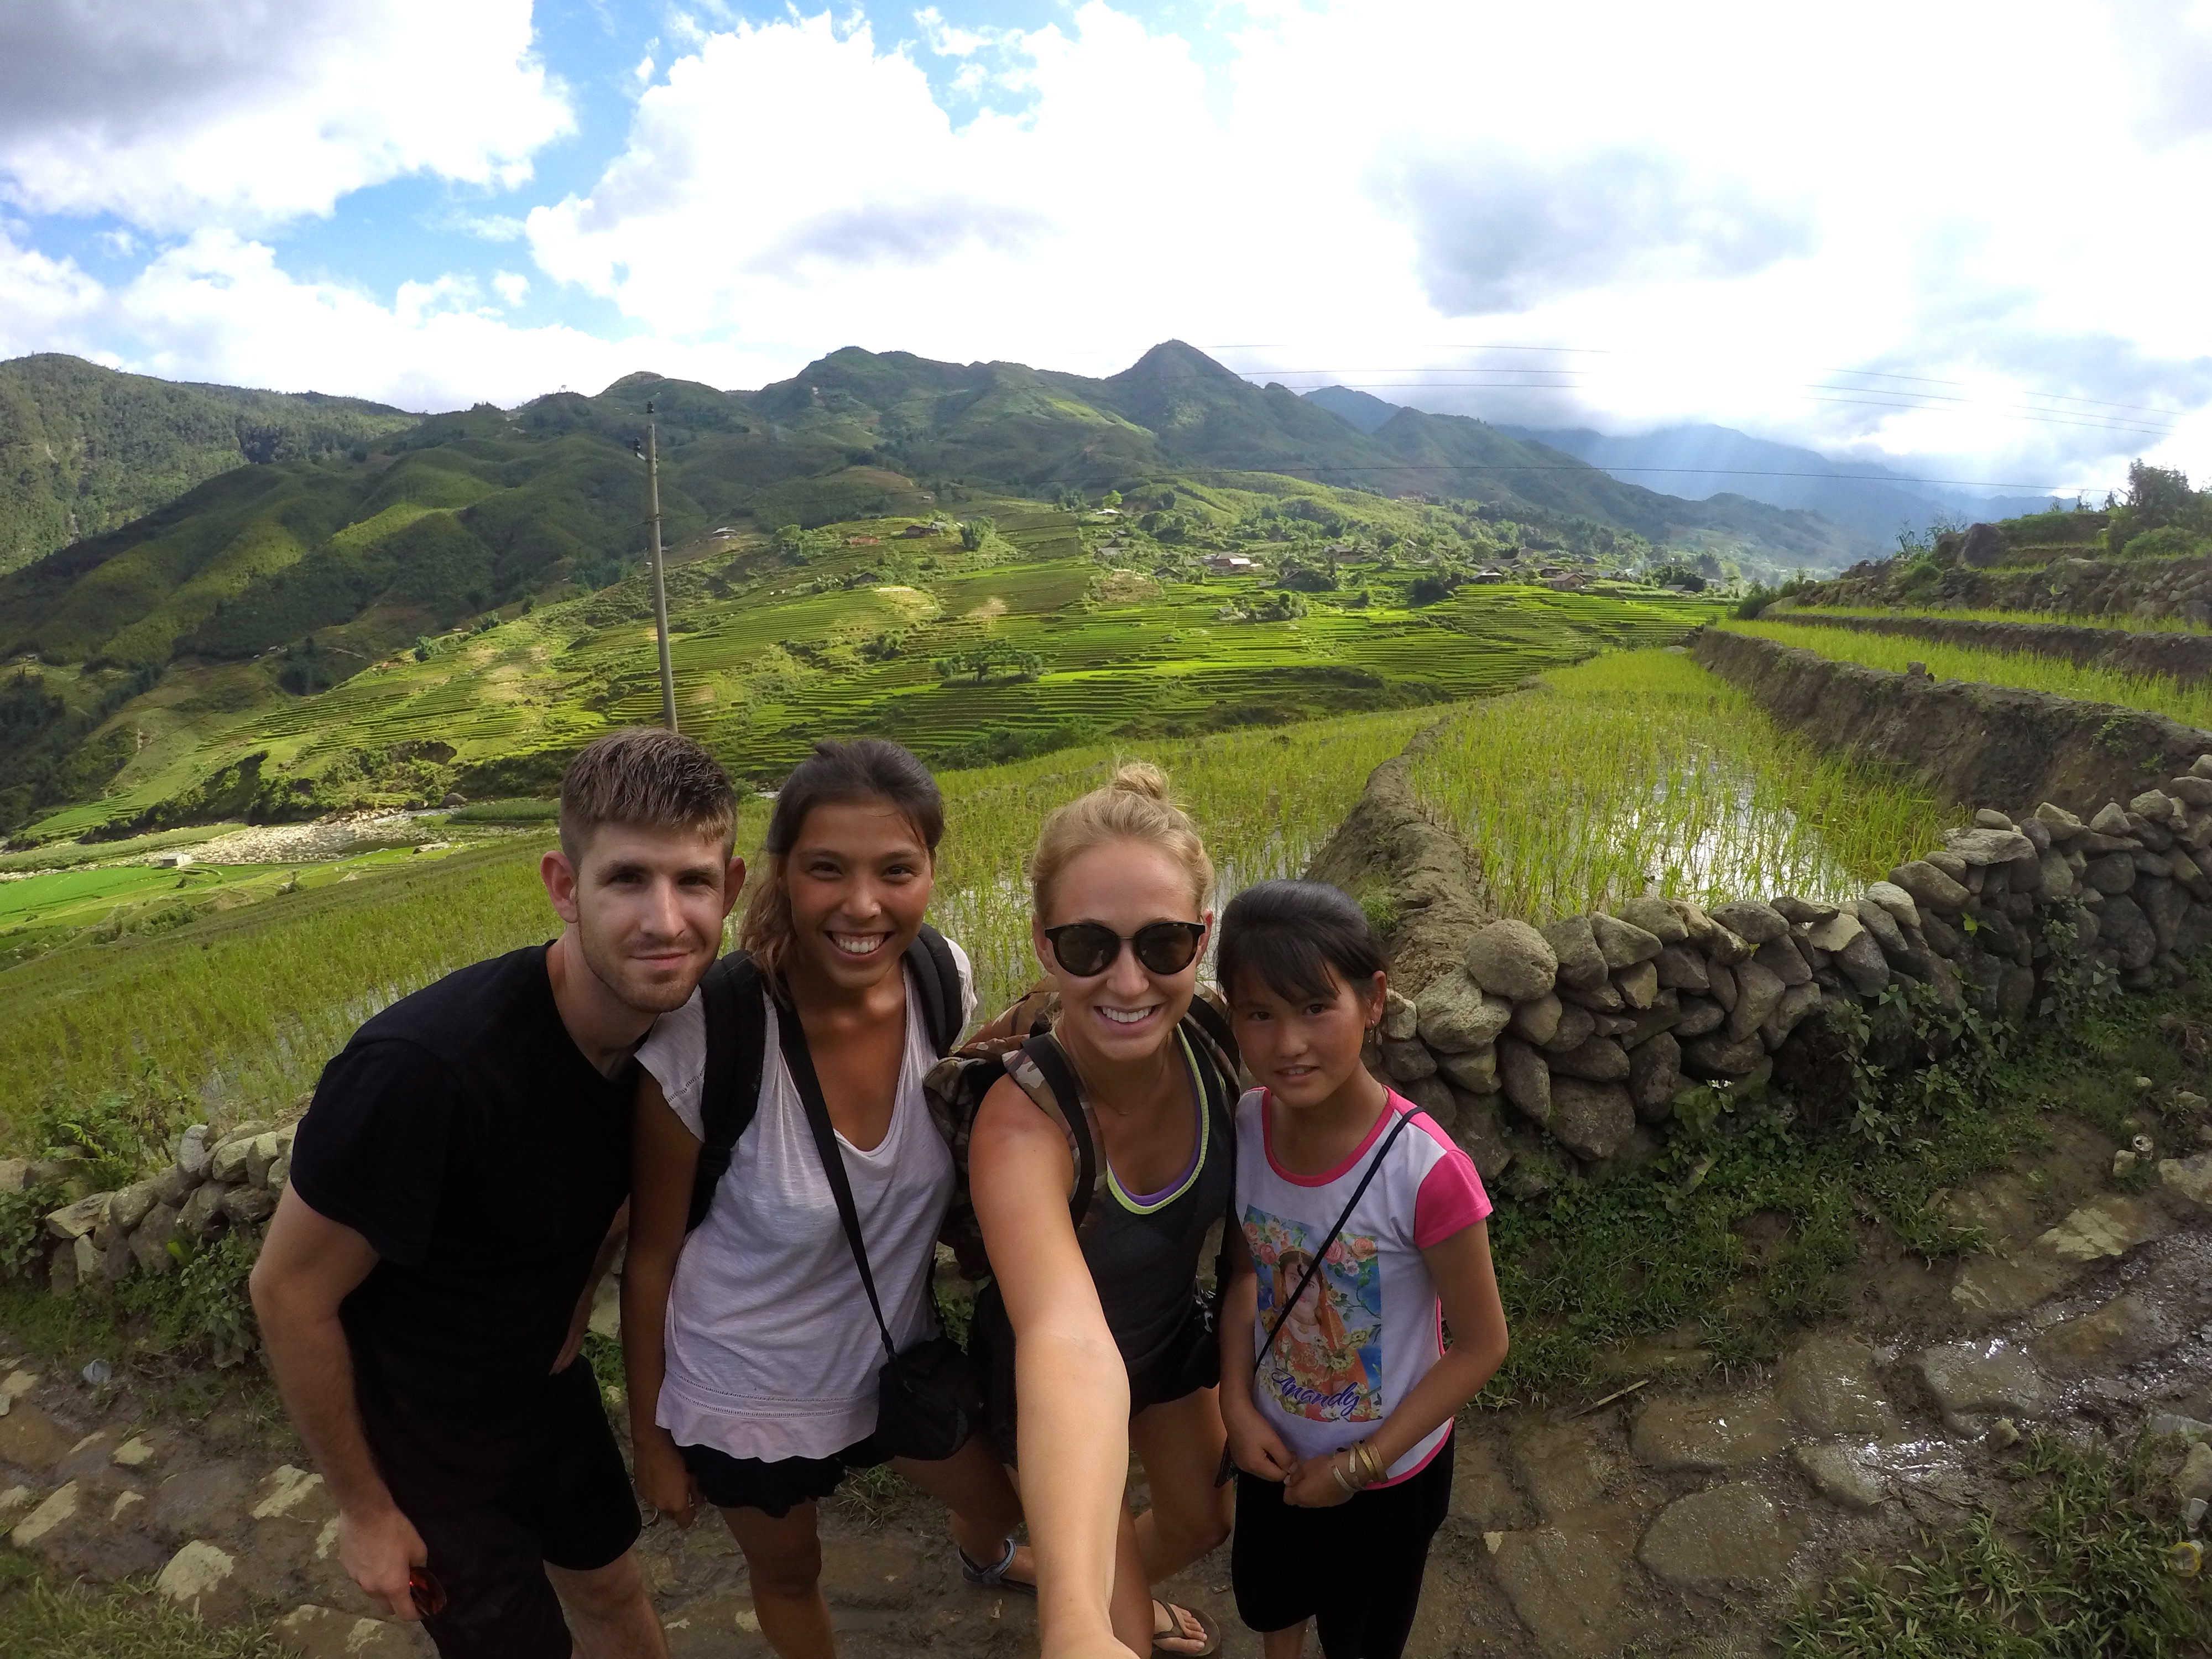 Josh, Vic, Me, and Ku's sister walking through the rice terraces.